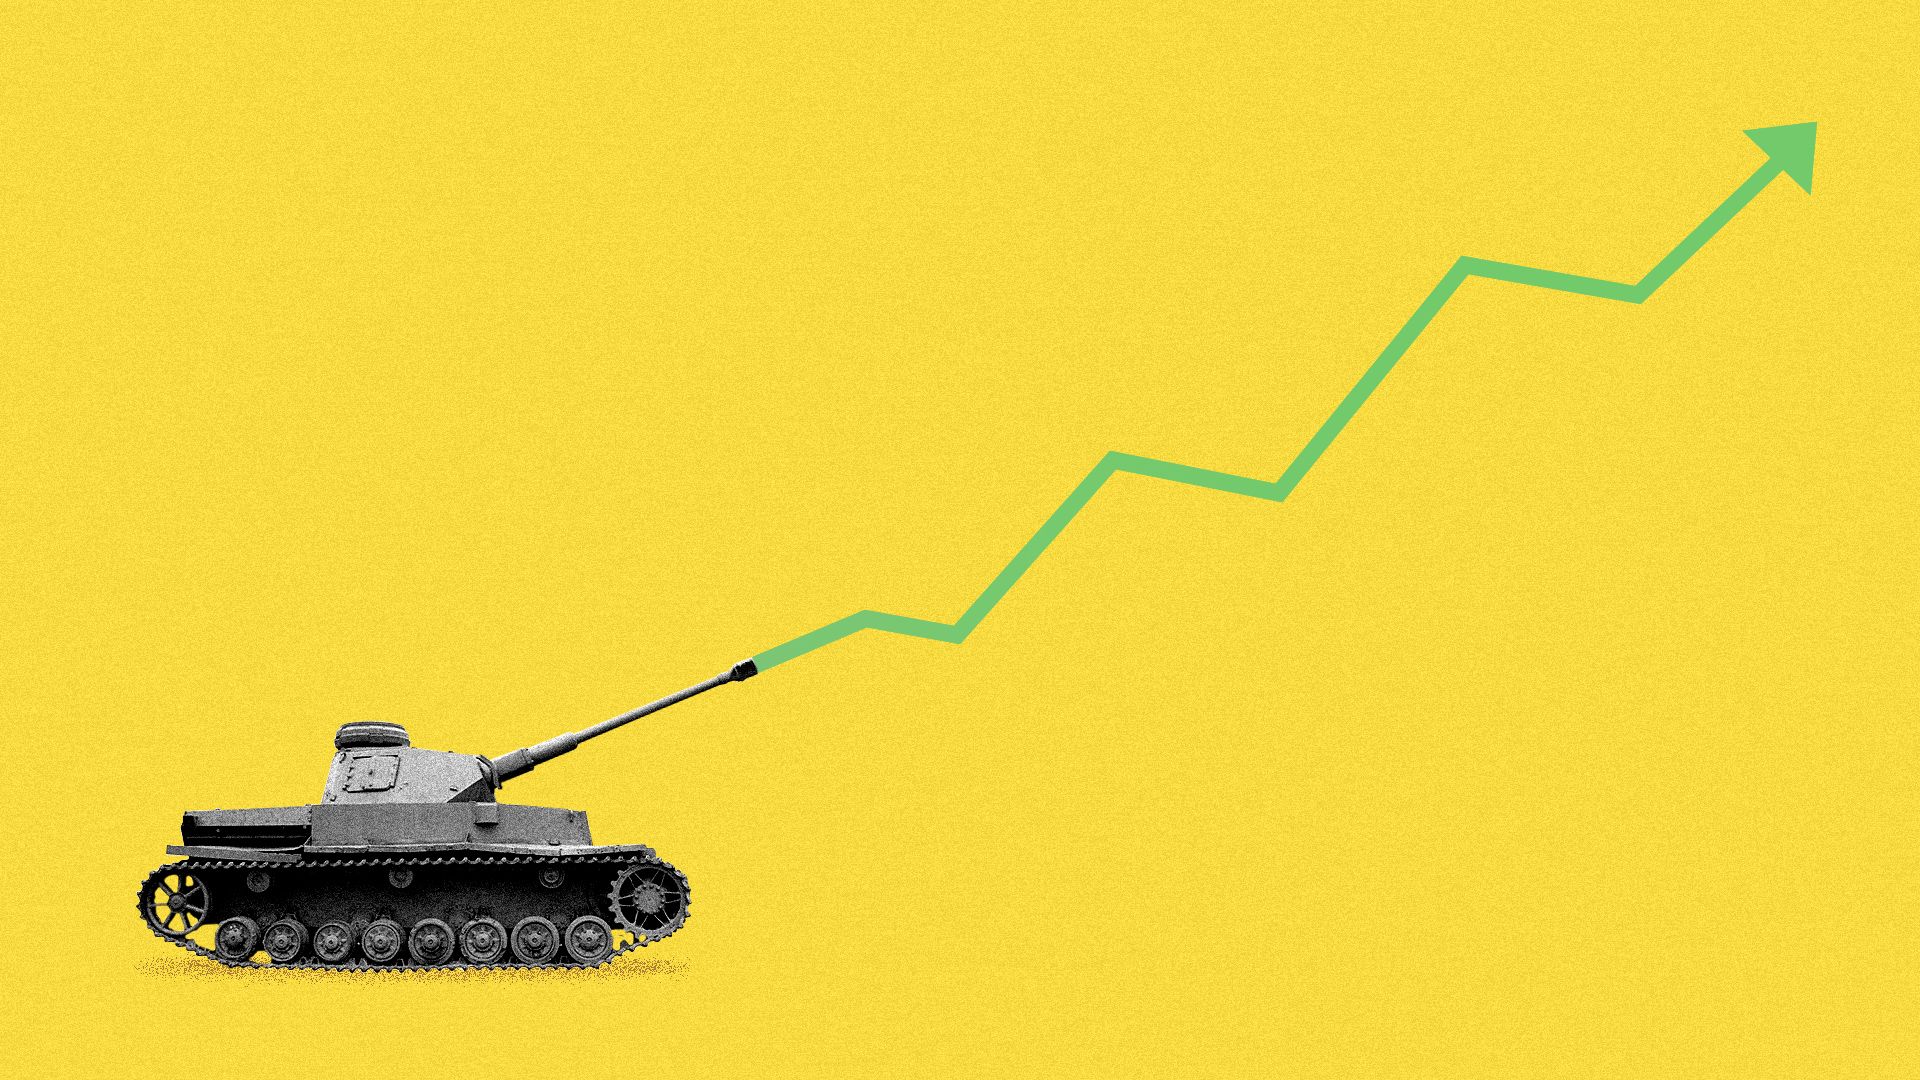 Illustration of a tank shooting an upward trending market arrow out of its barrel. 